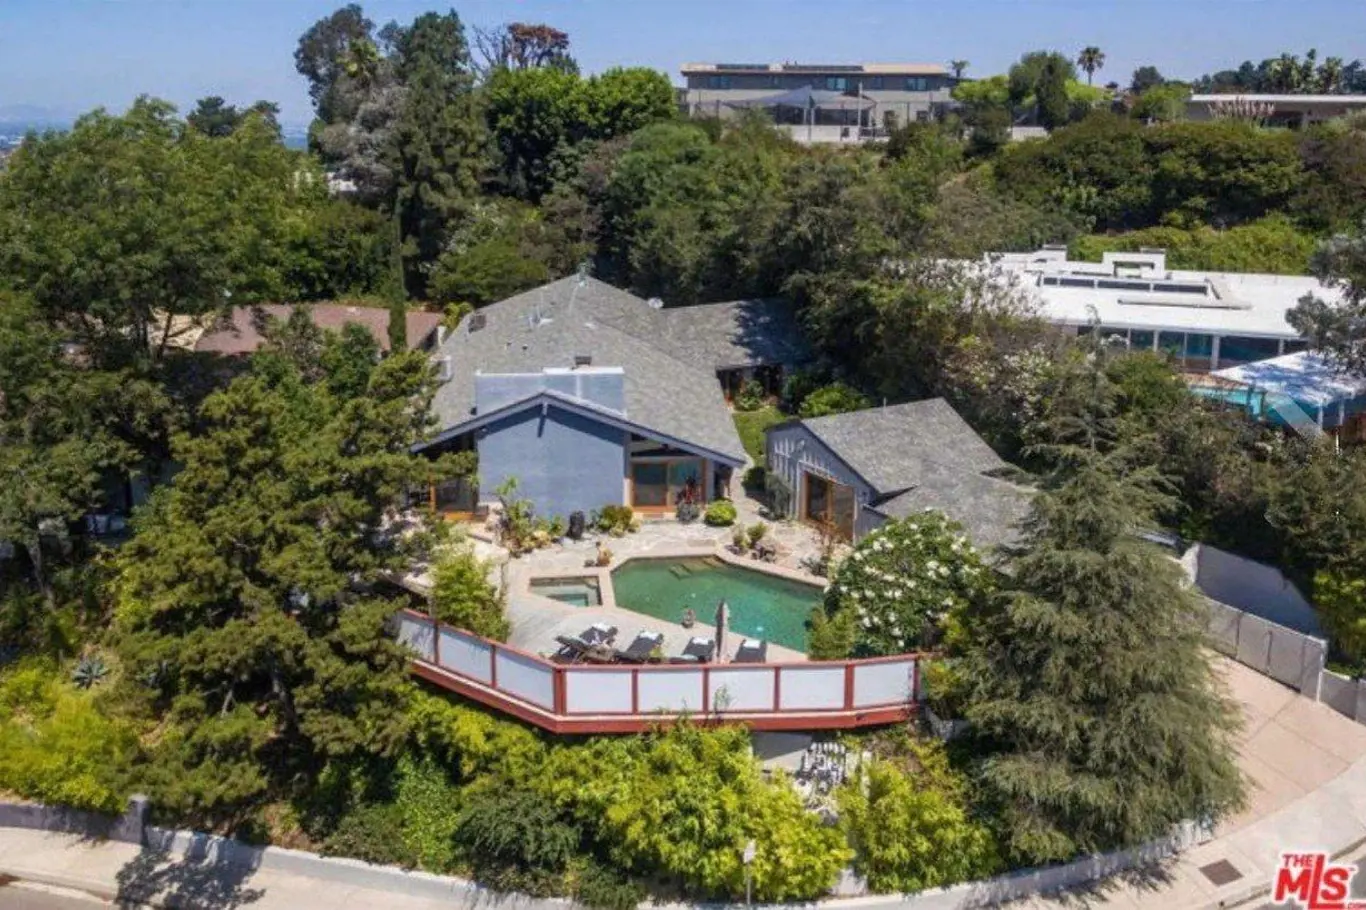 Herec Danny McBride pronajímá své krásné sídlo v Hollywoodu